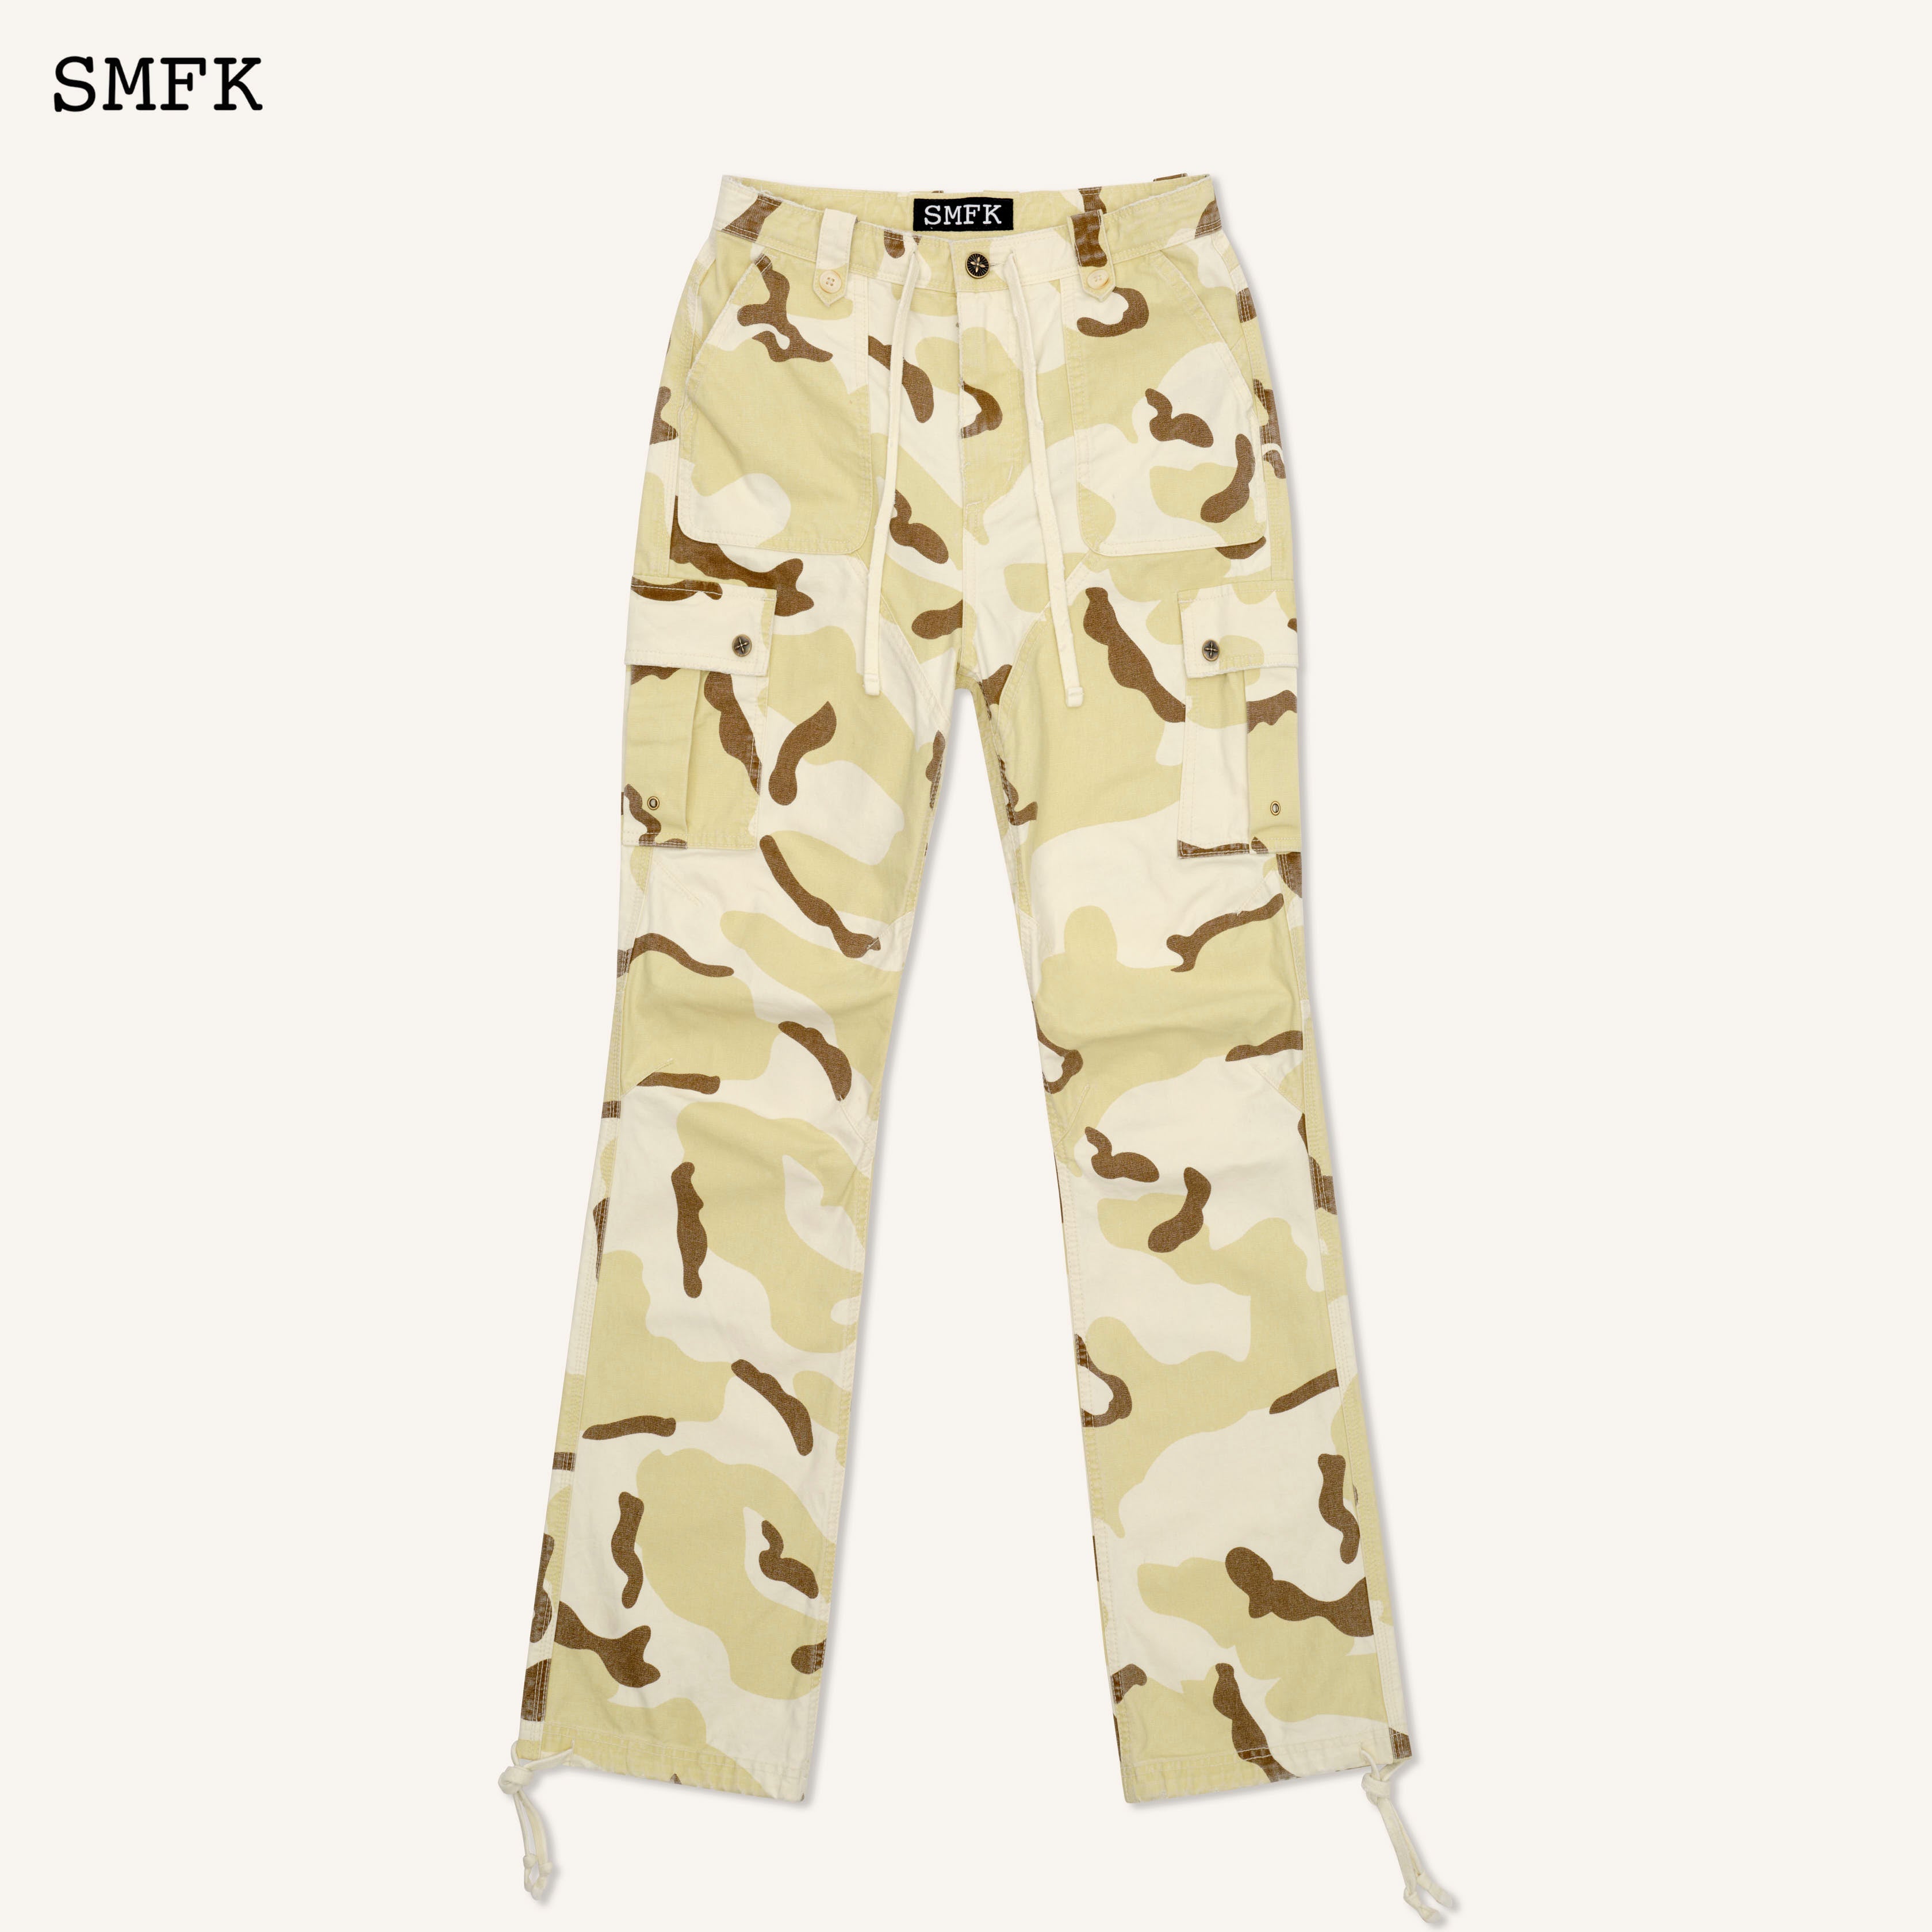 SMFK Wildworld Stray Desert Camouflage Work Wear Pants